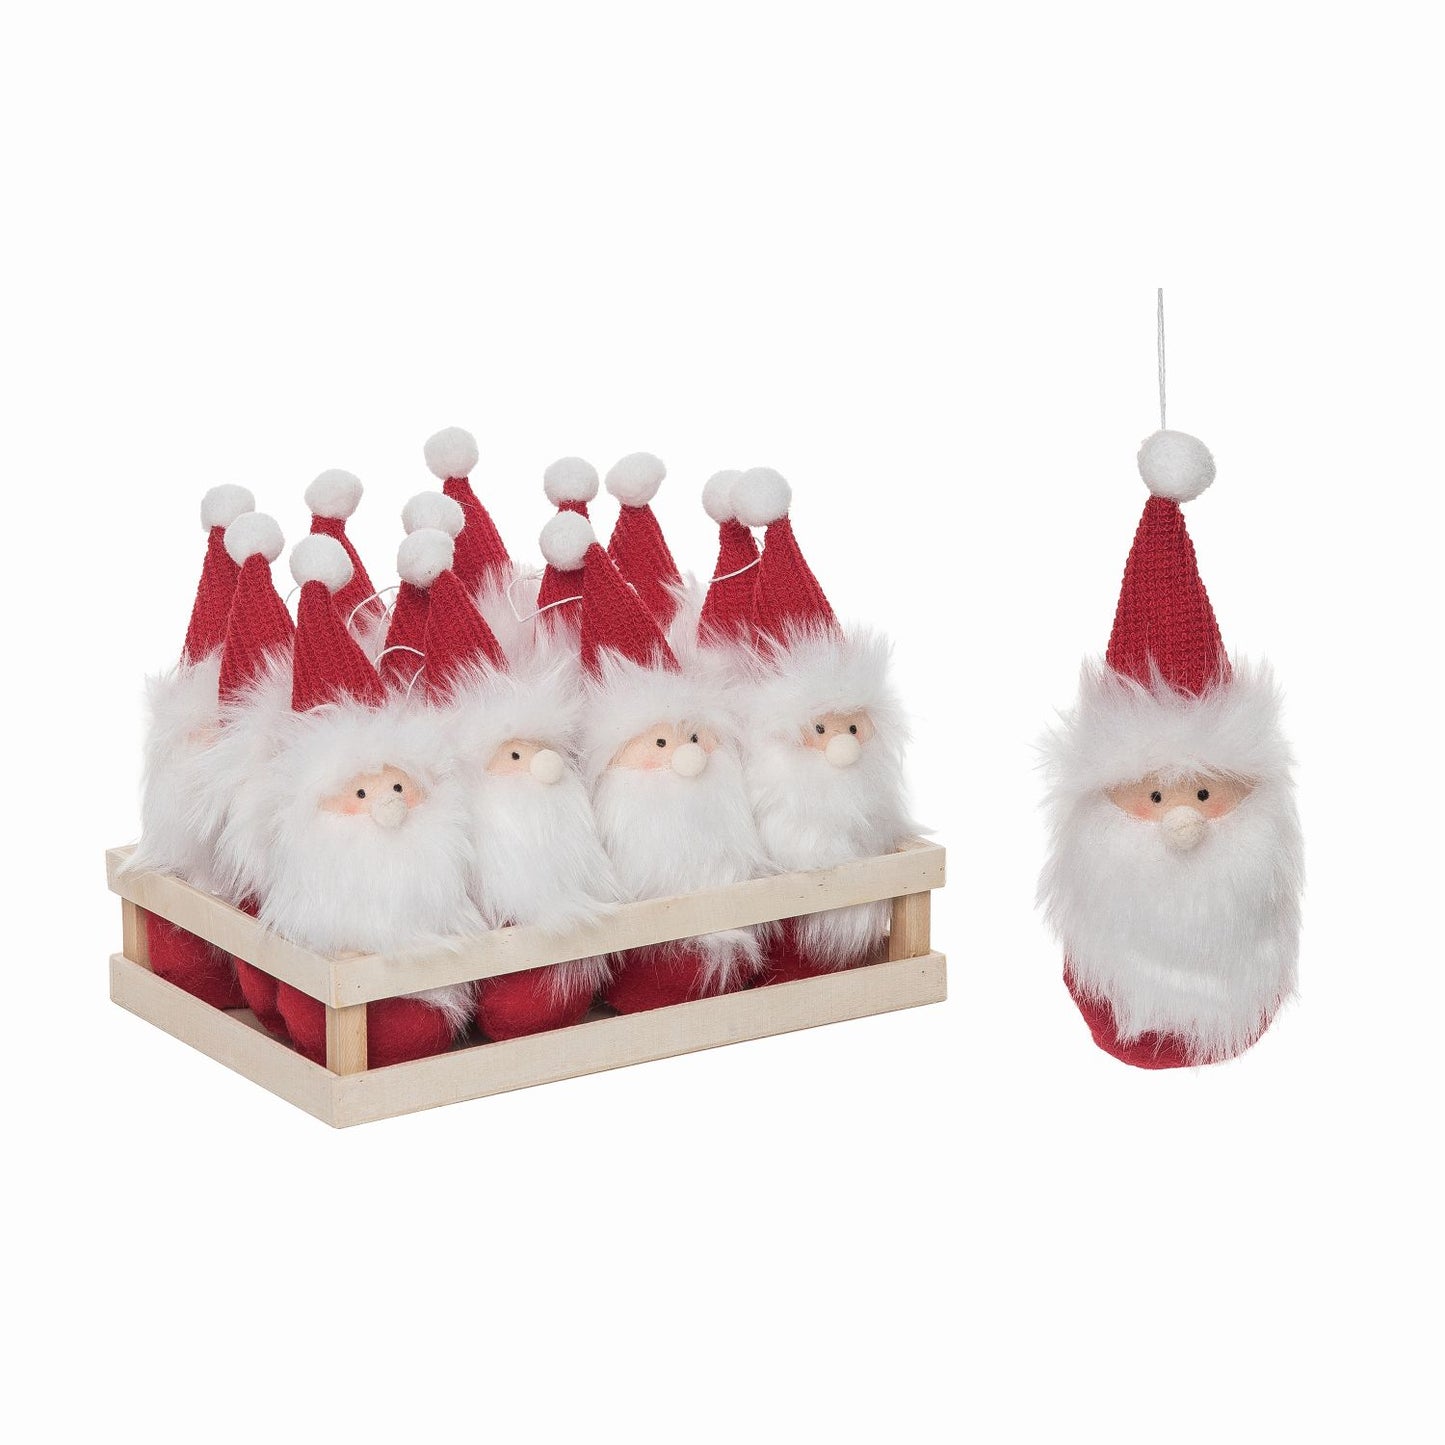 Transpac Plush Fuzzy Santa Ornaments In Crate, Set Of 12